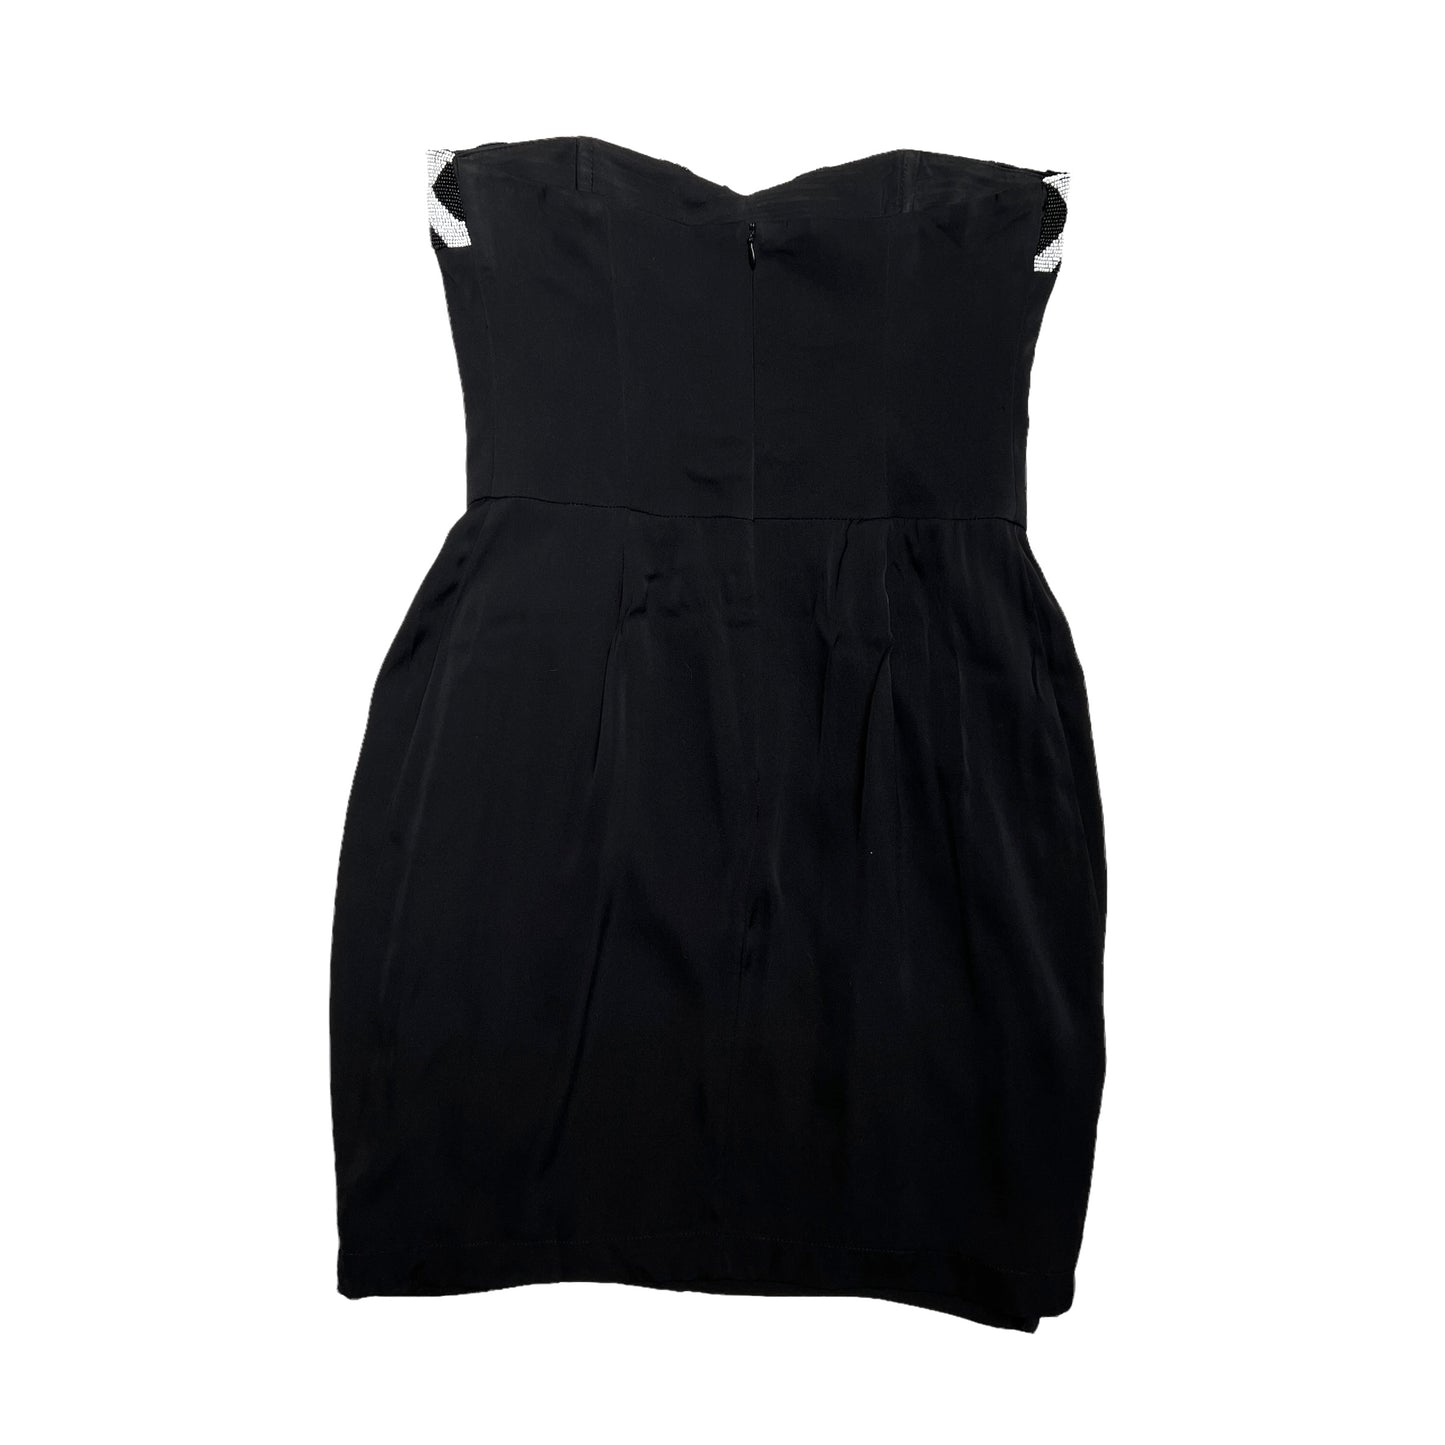 Vintage Black Dress - XS